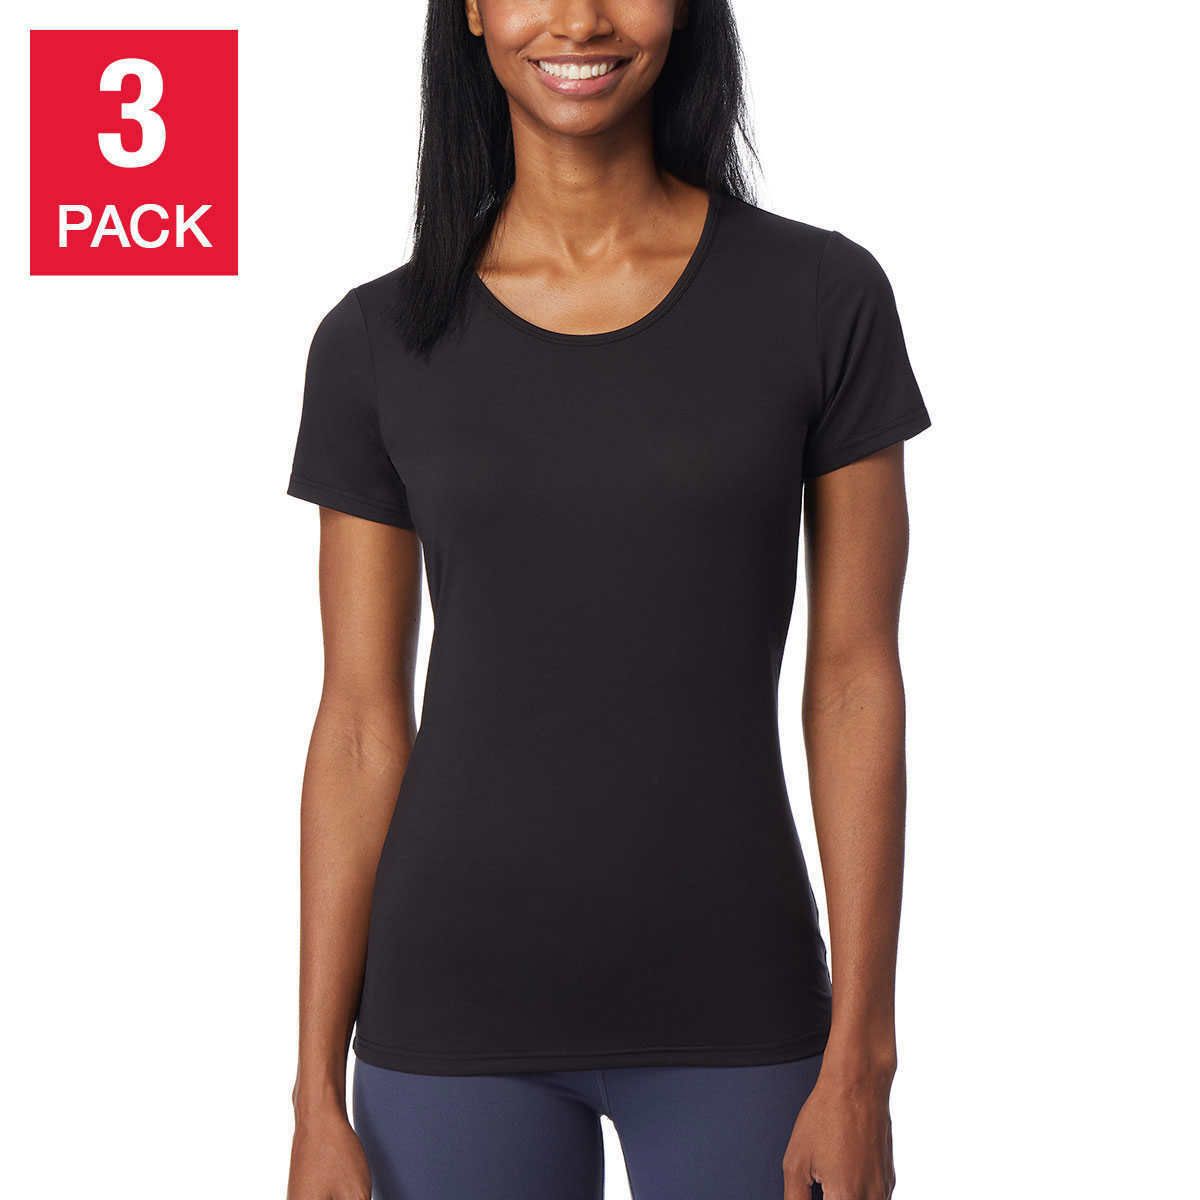 32 Degrees Women's 3 Pack Short Sleeve Scoop Neck T-Shirt - Versatile, Comfortable, Stylish Apparel